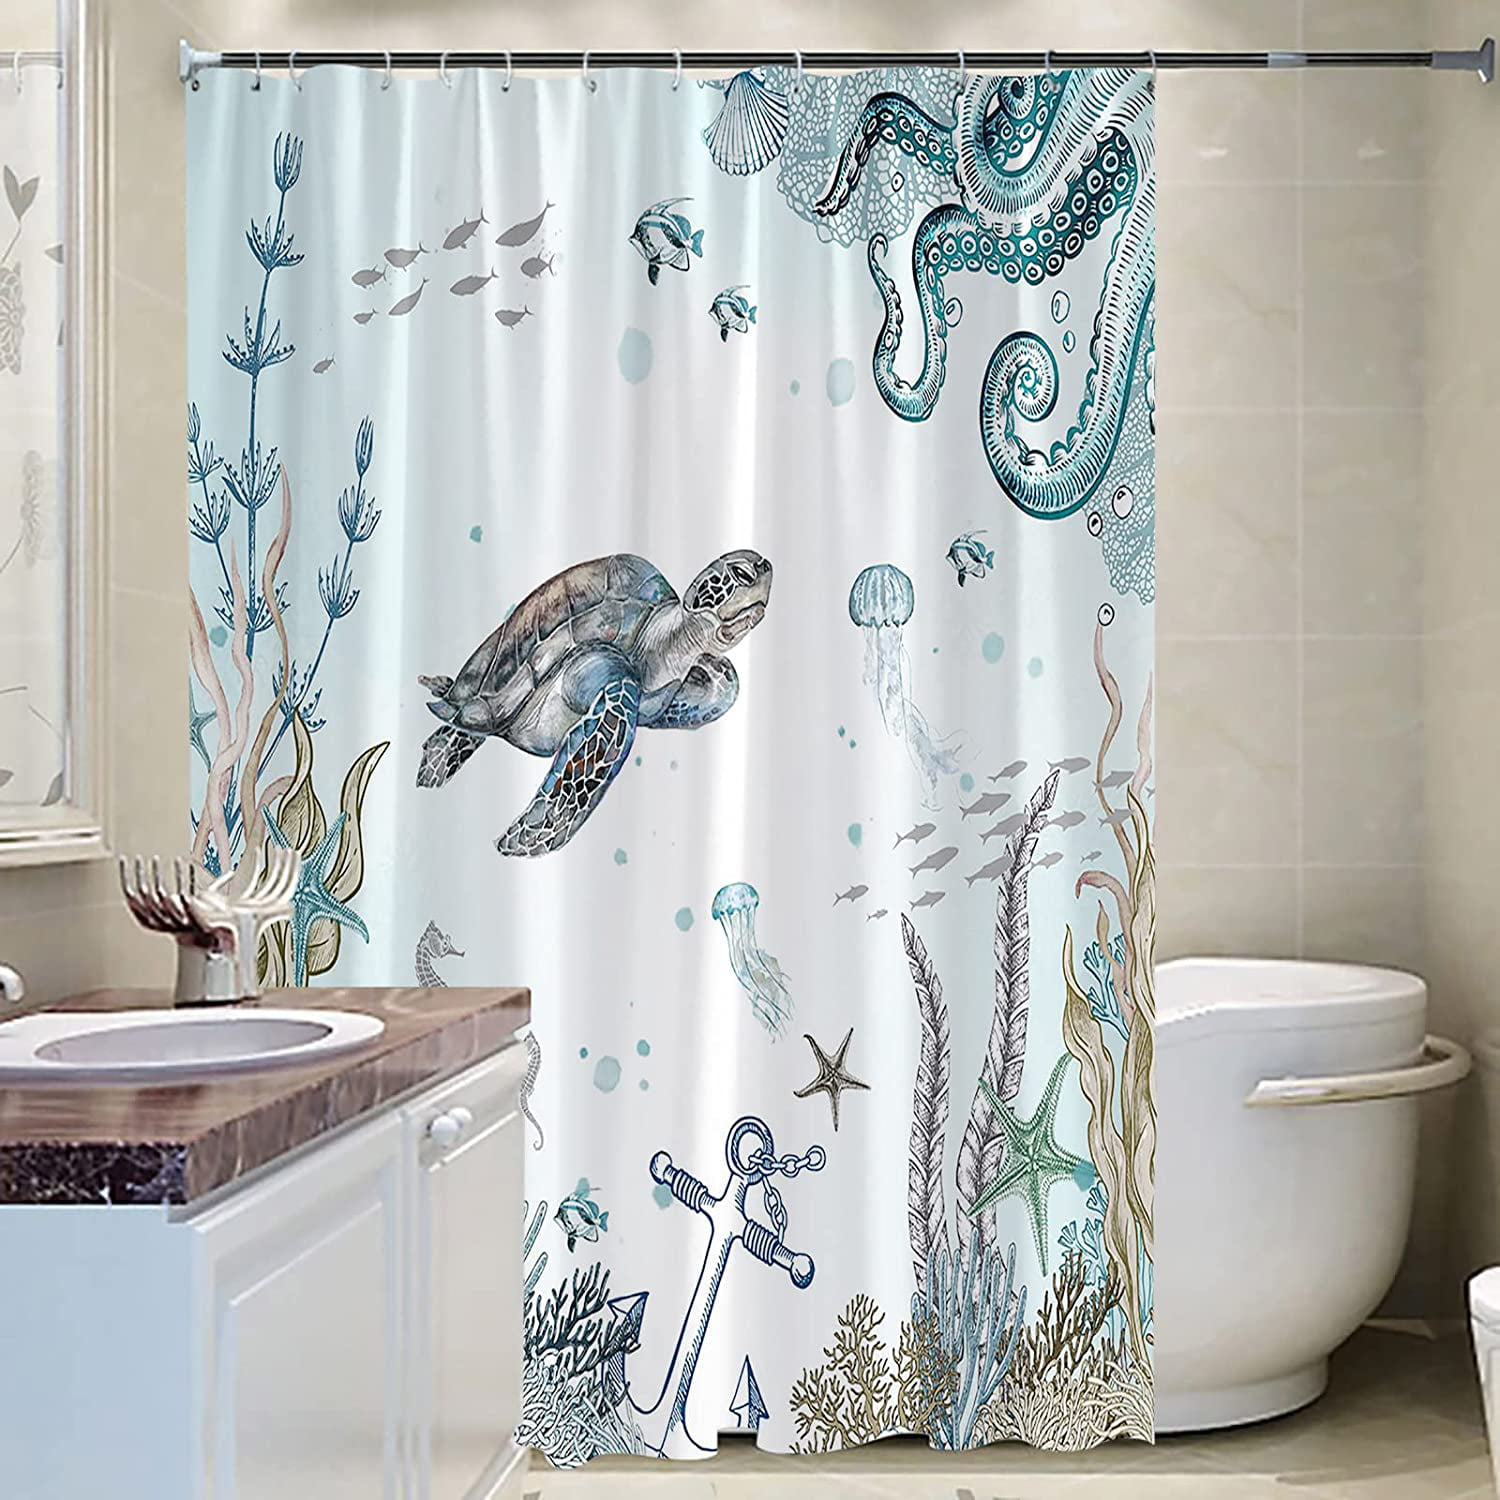 Newhomestyle Sea Turtle Shower Curtain Ocean Creature Landscape Shower  Curtains Beach Theme Bathroom Decoration Fabric, 72x72 Inch 